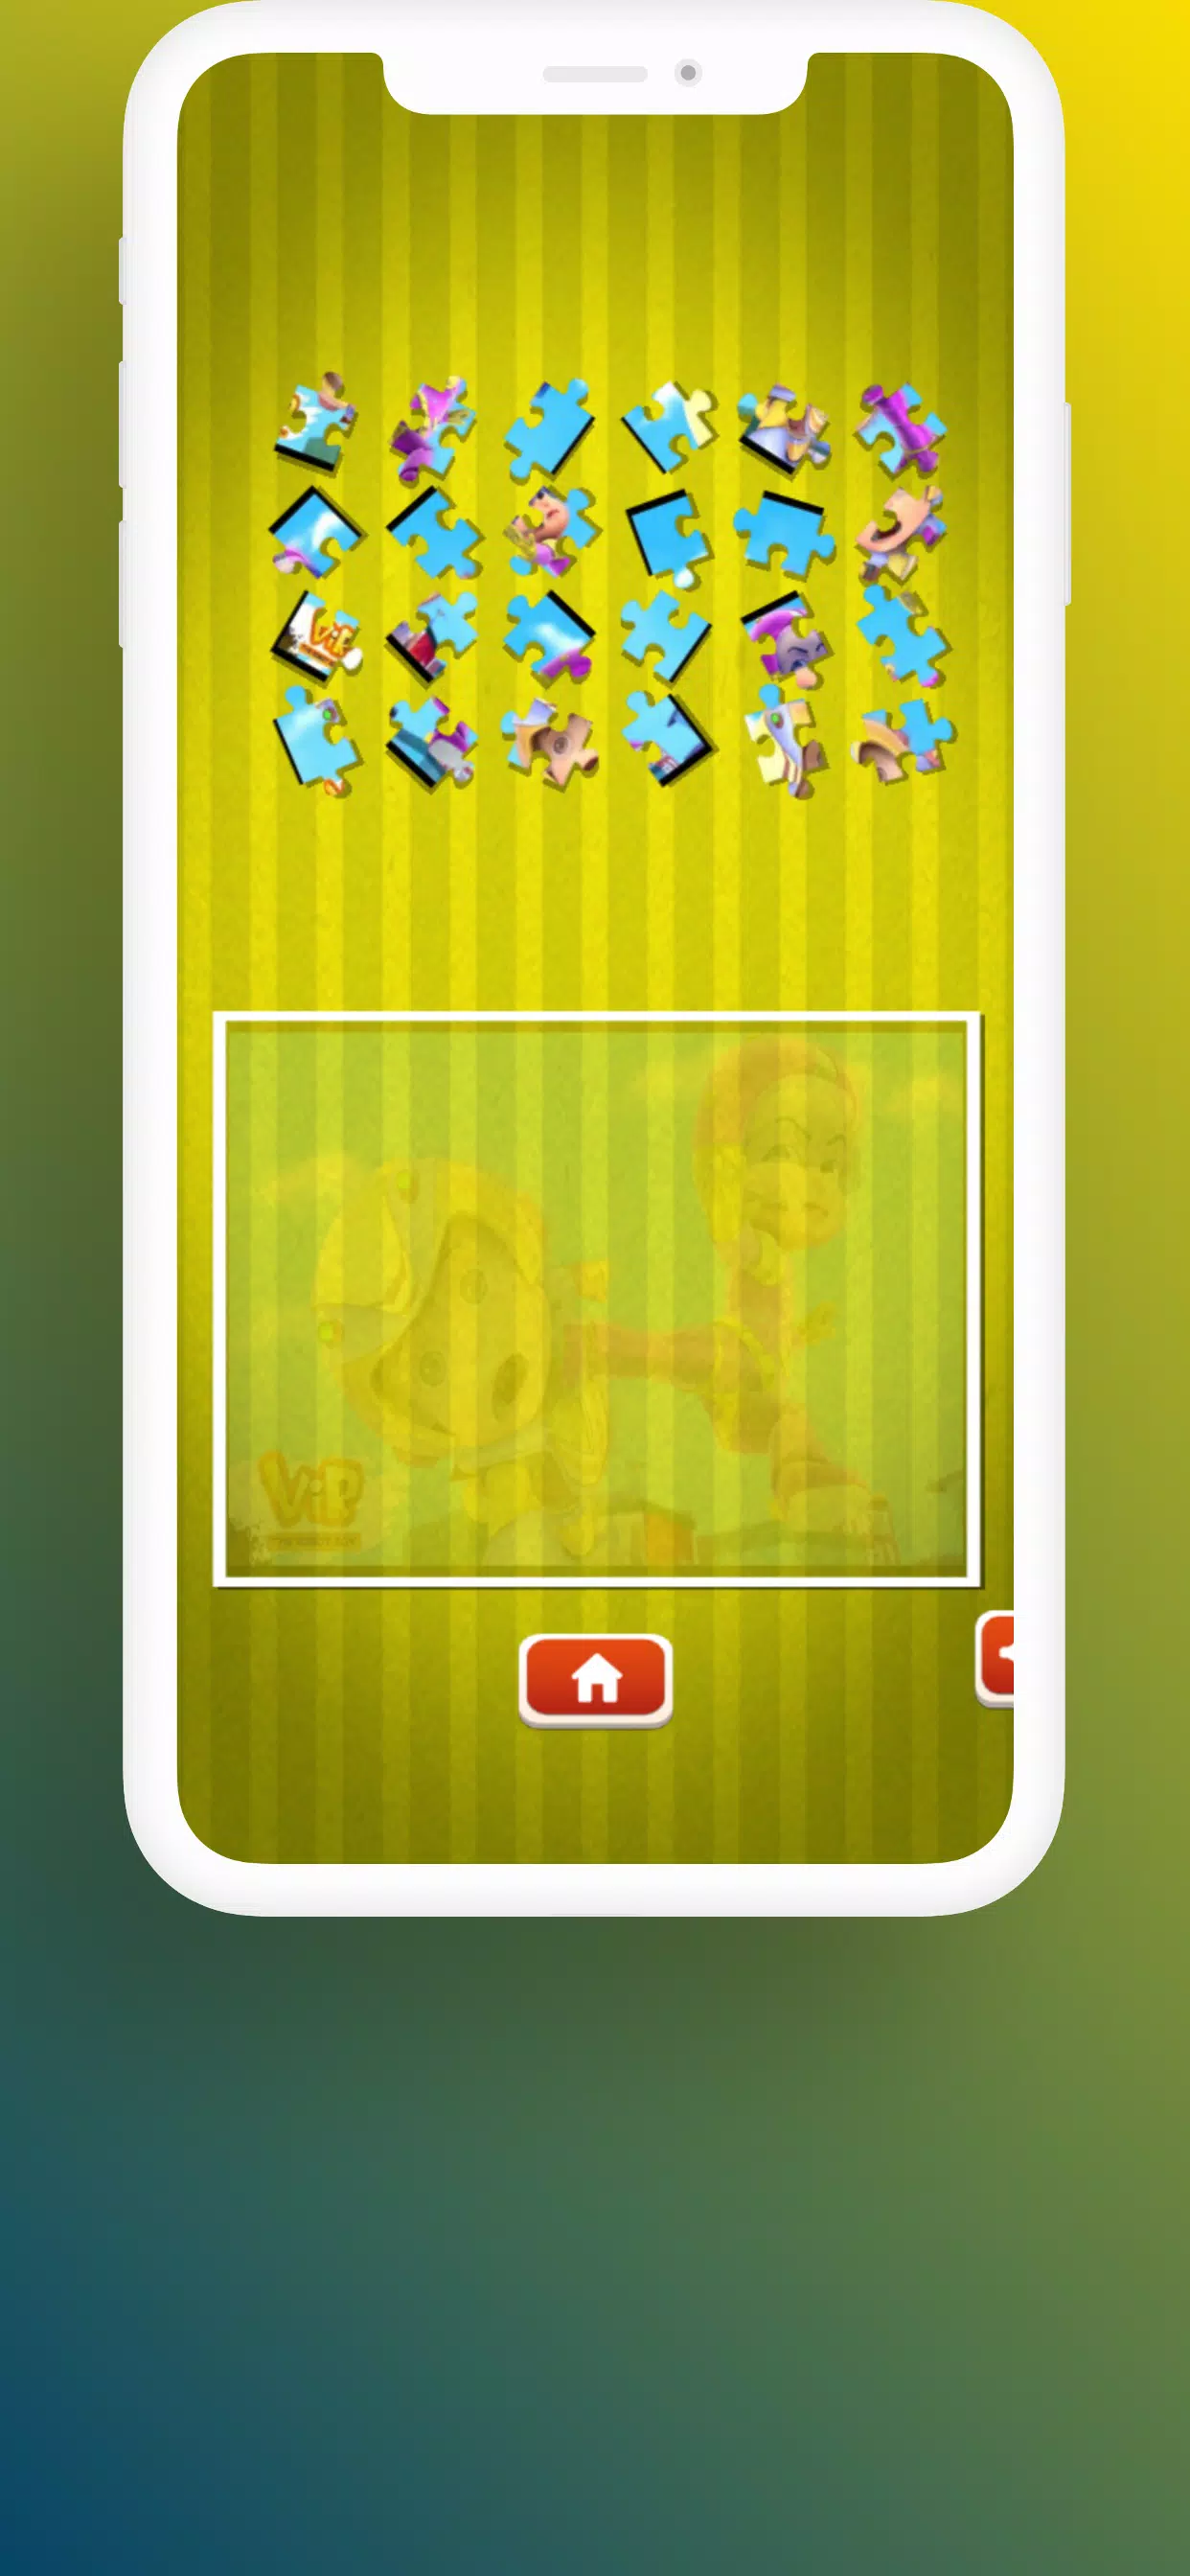 Vir Game Robot Boy Puzzle para Android - Download